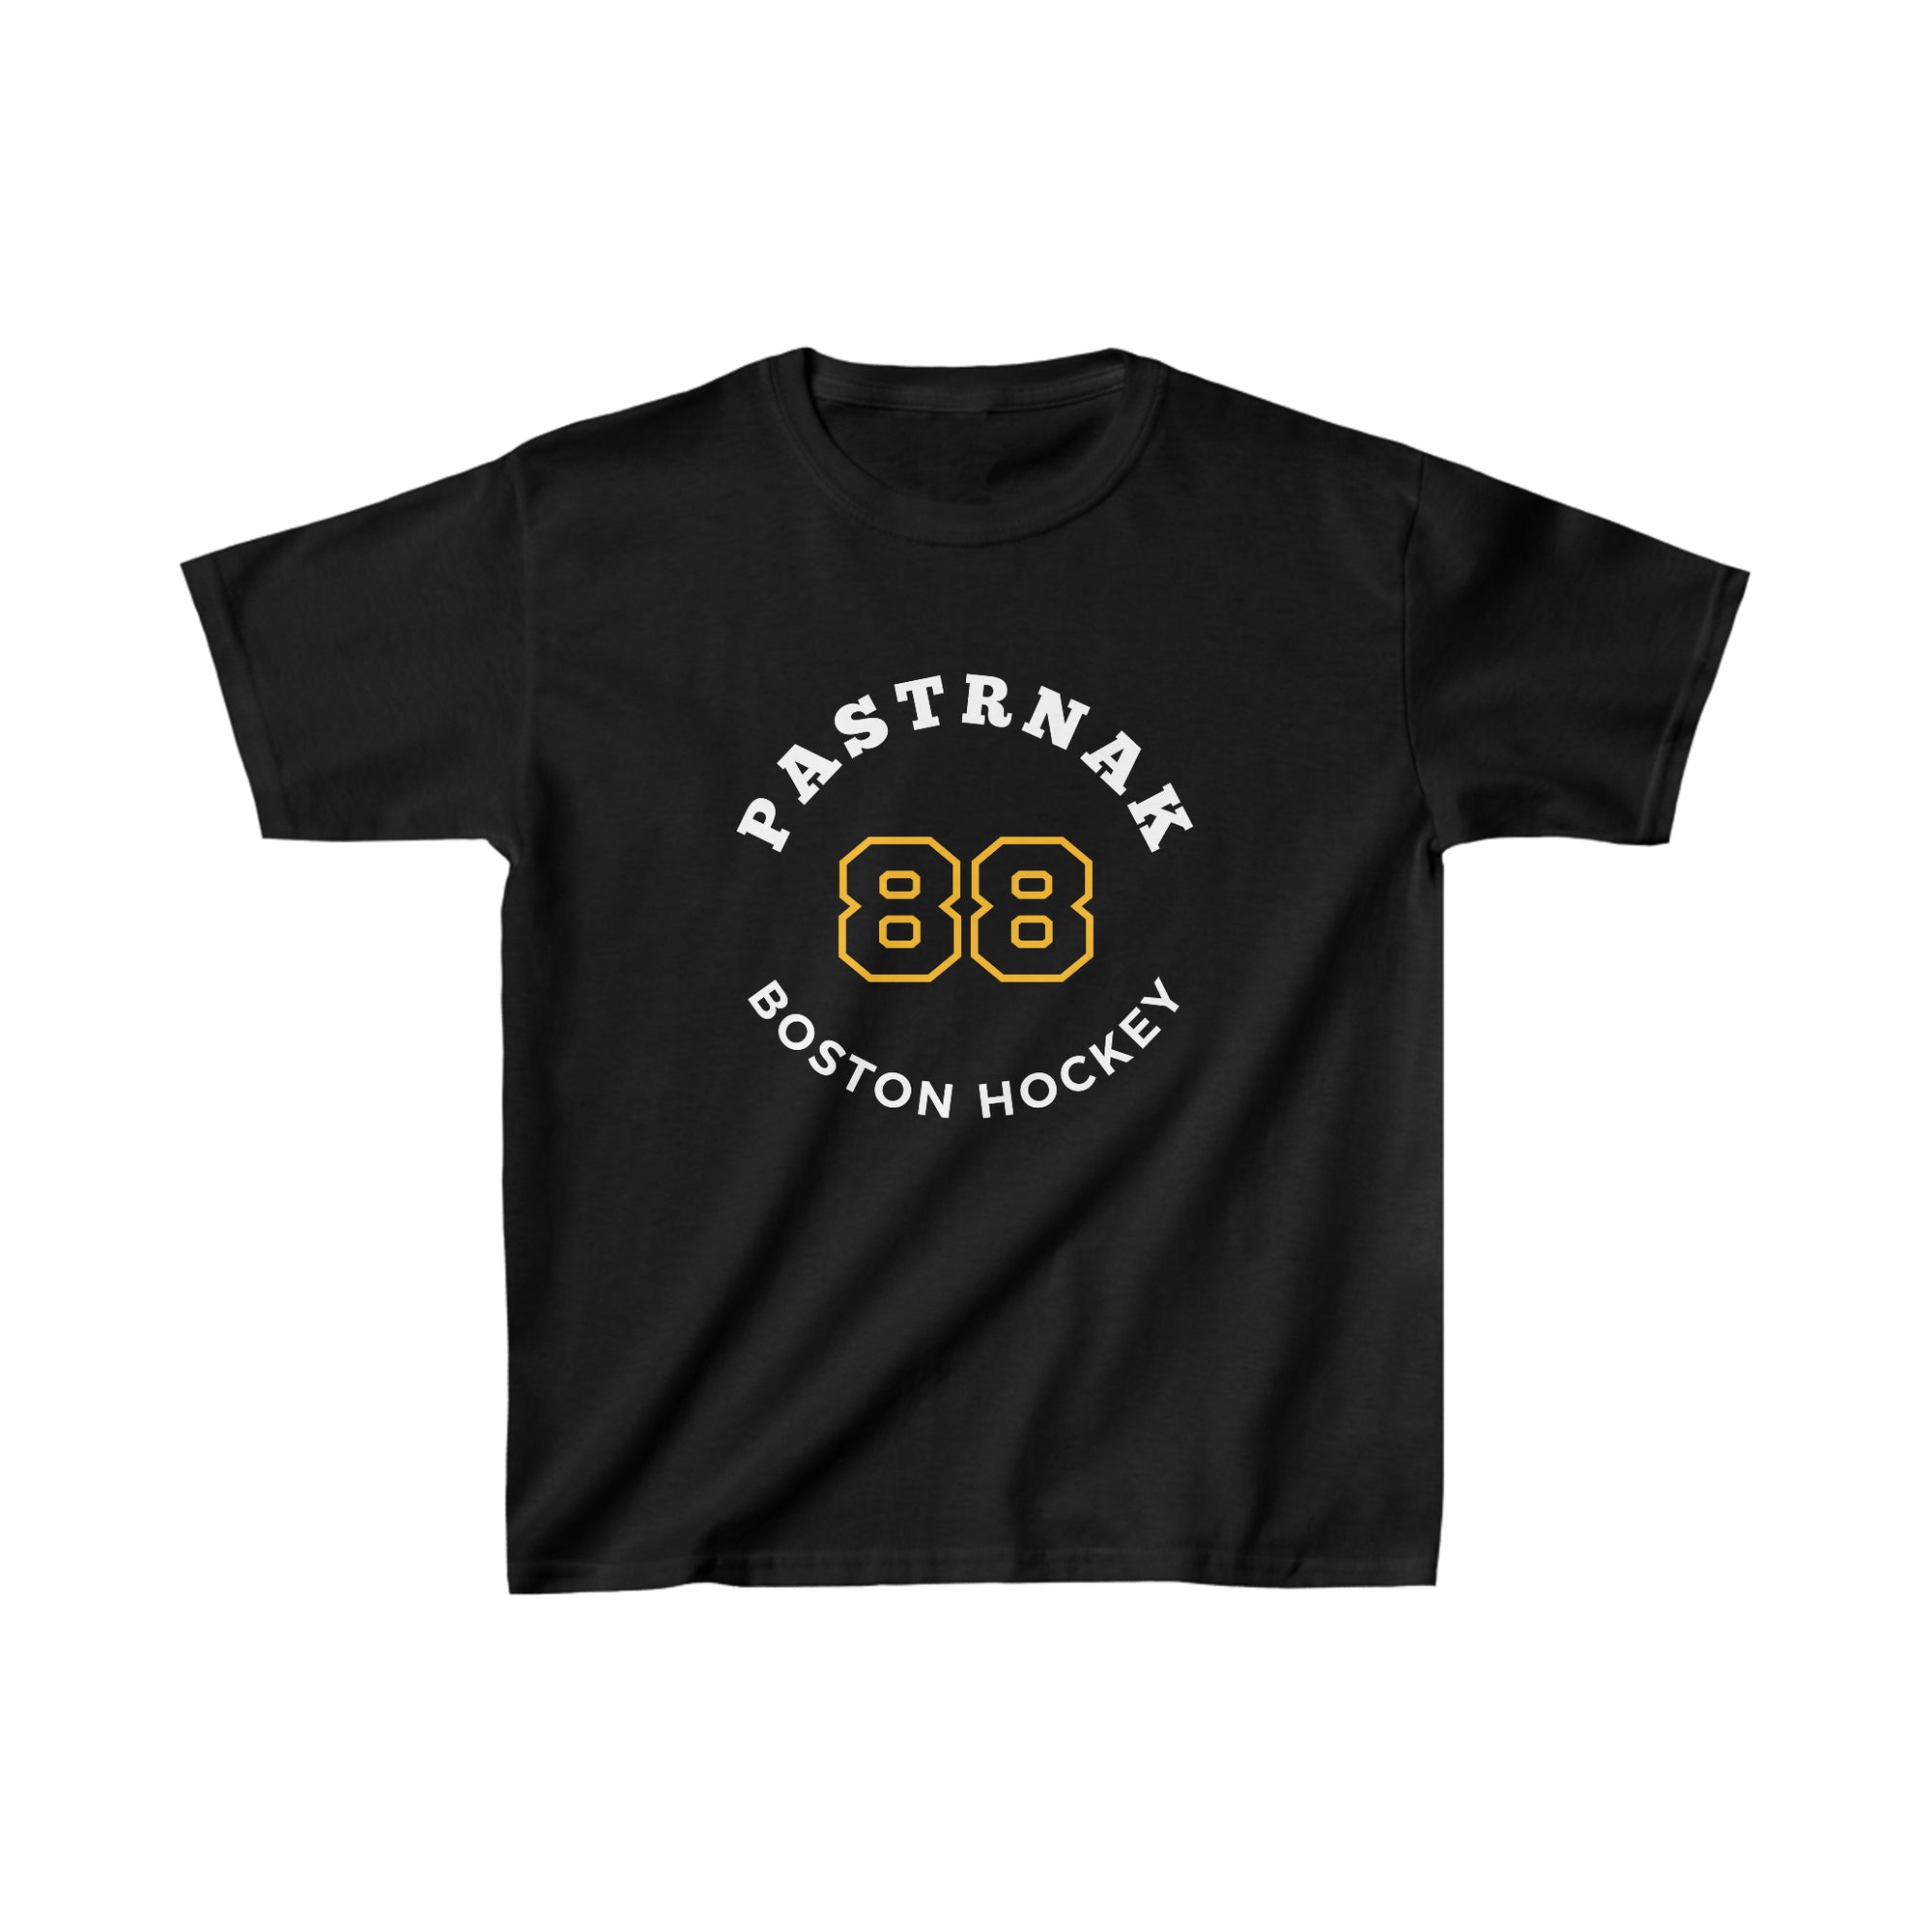 Pastrnak 88 Boston Hockey Number Arch Design Kids Tee